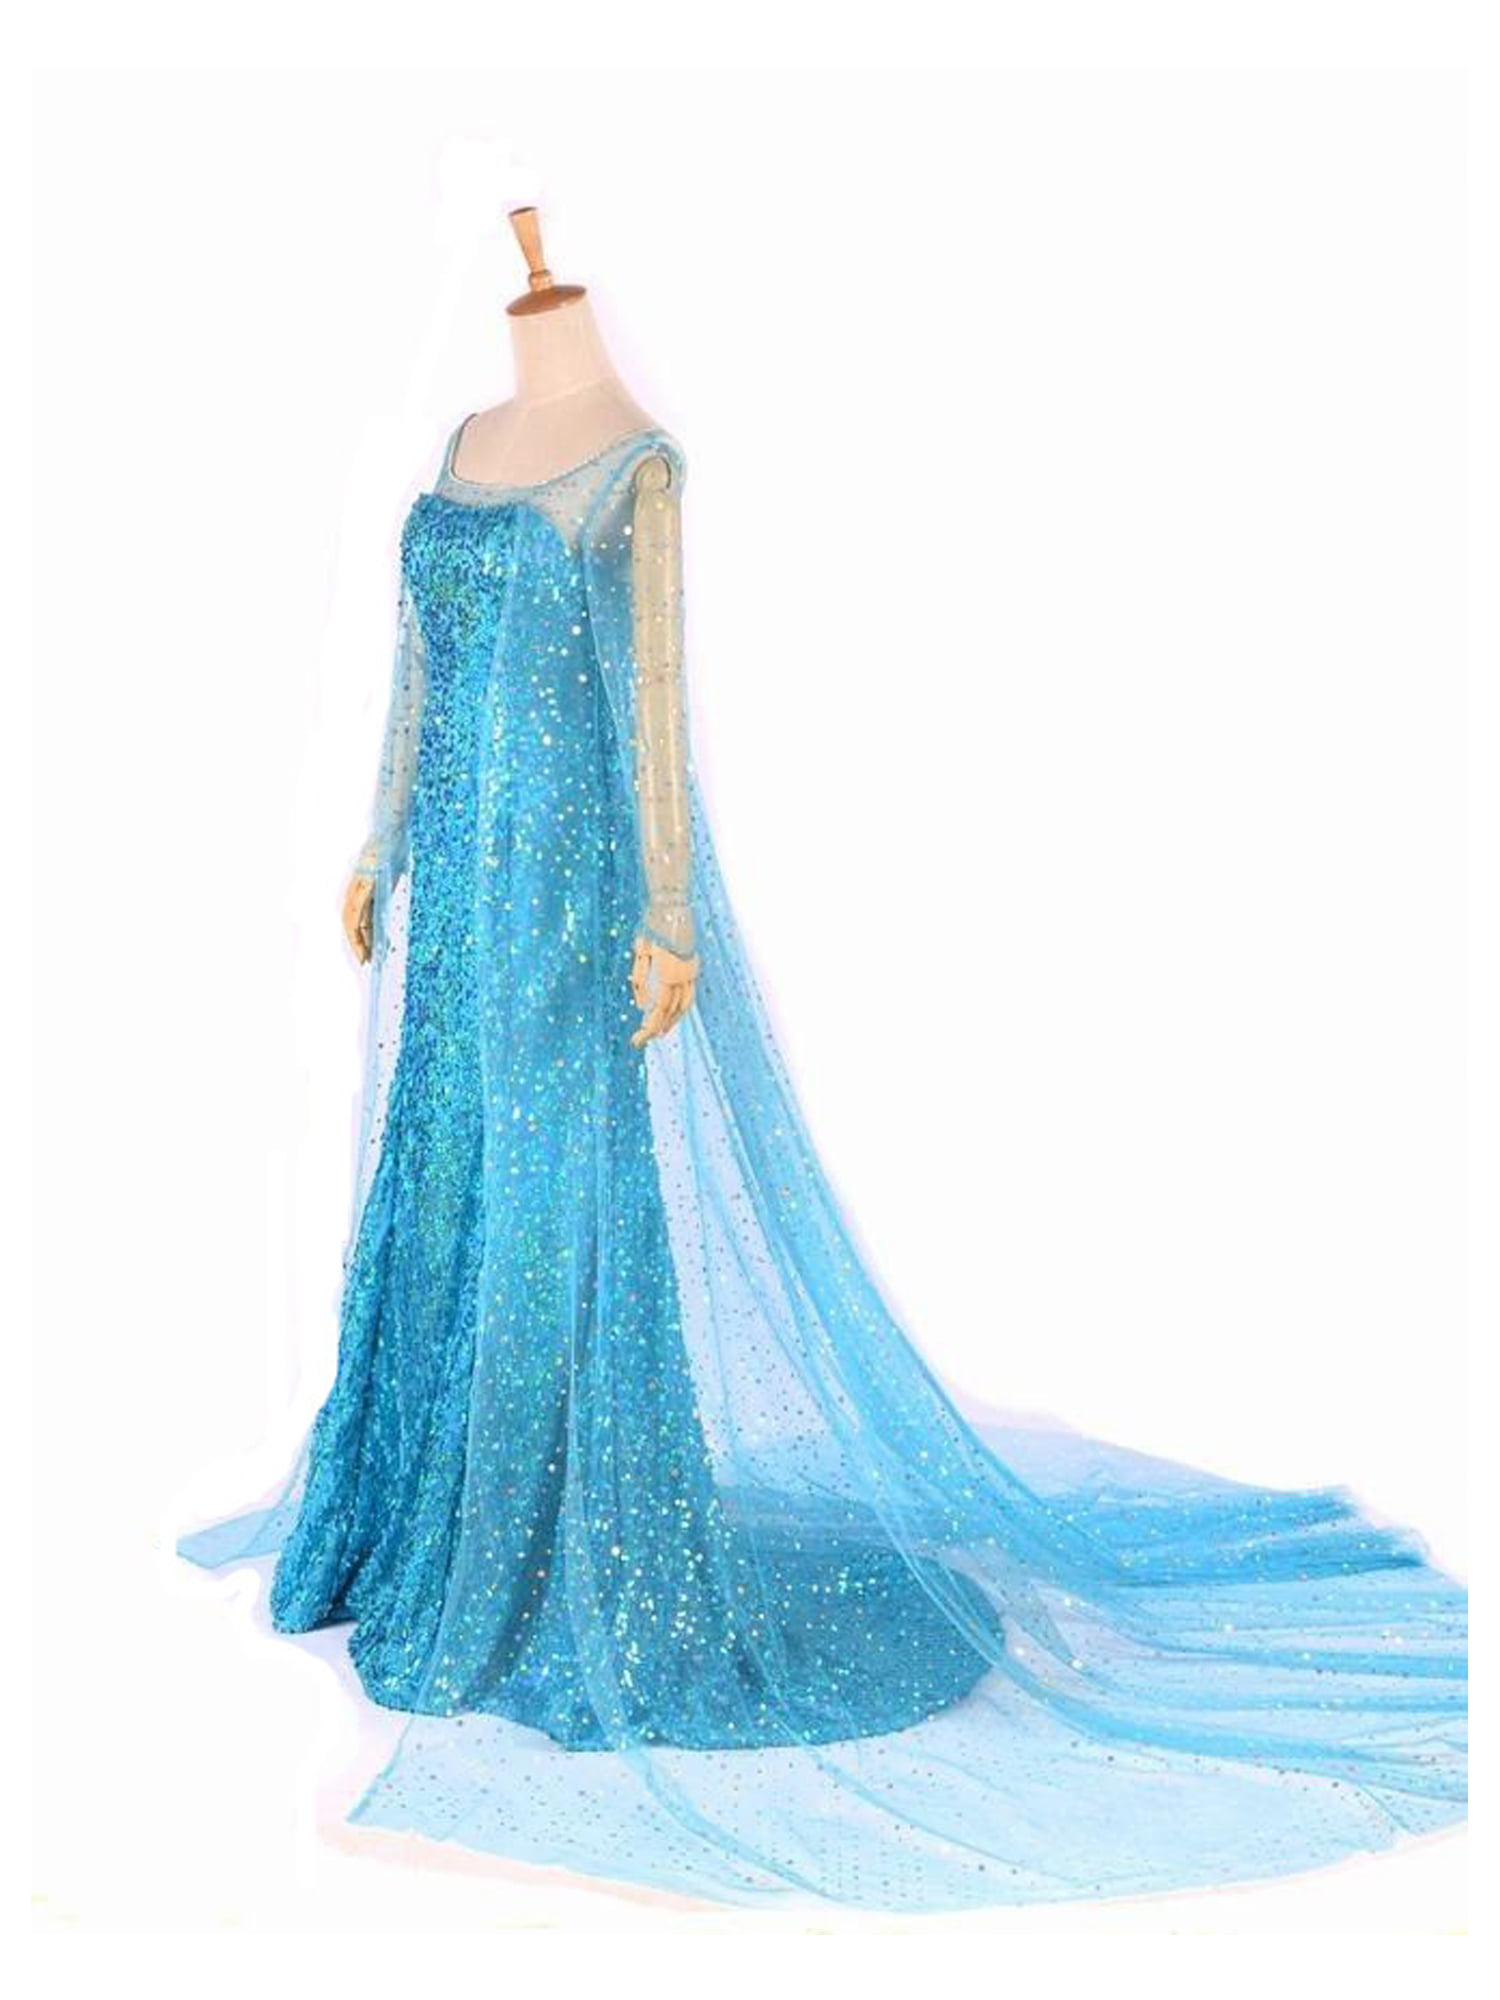 Musuos - Hirigin Blue Bling Frozen Elsa Queen Adult Women Party Dress Costume Elsa Dresses 